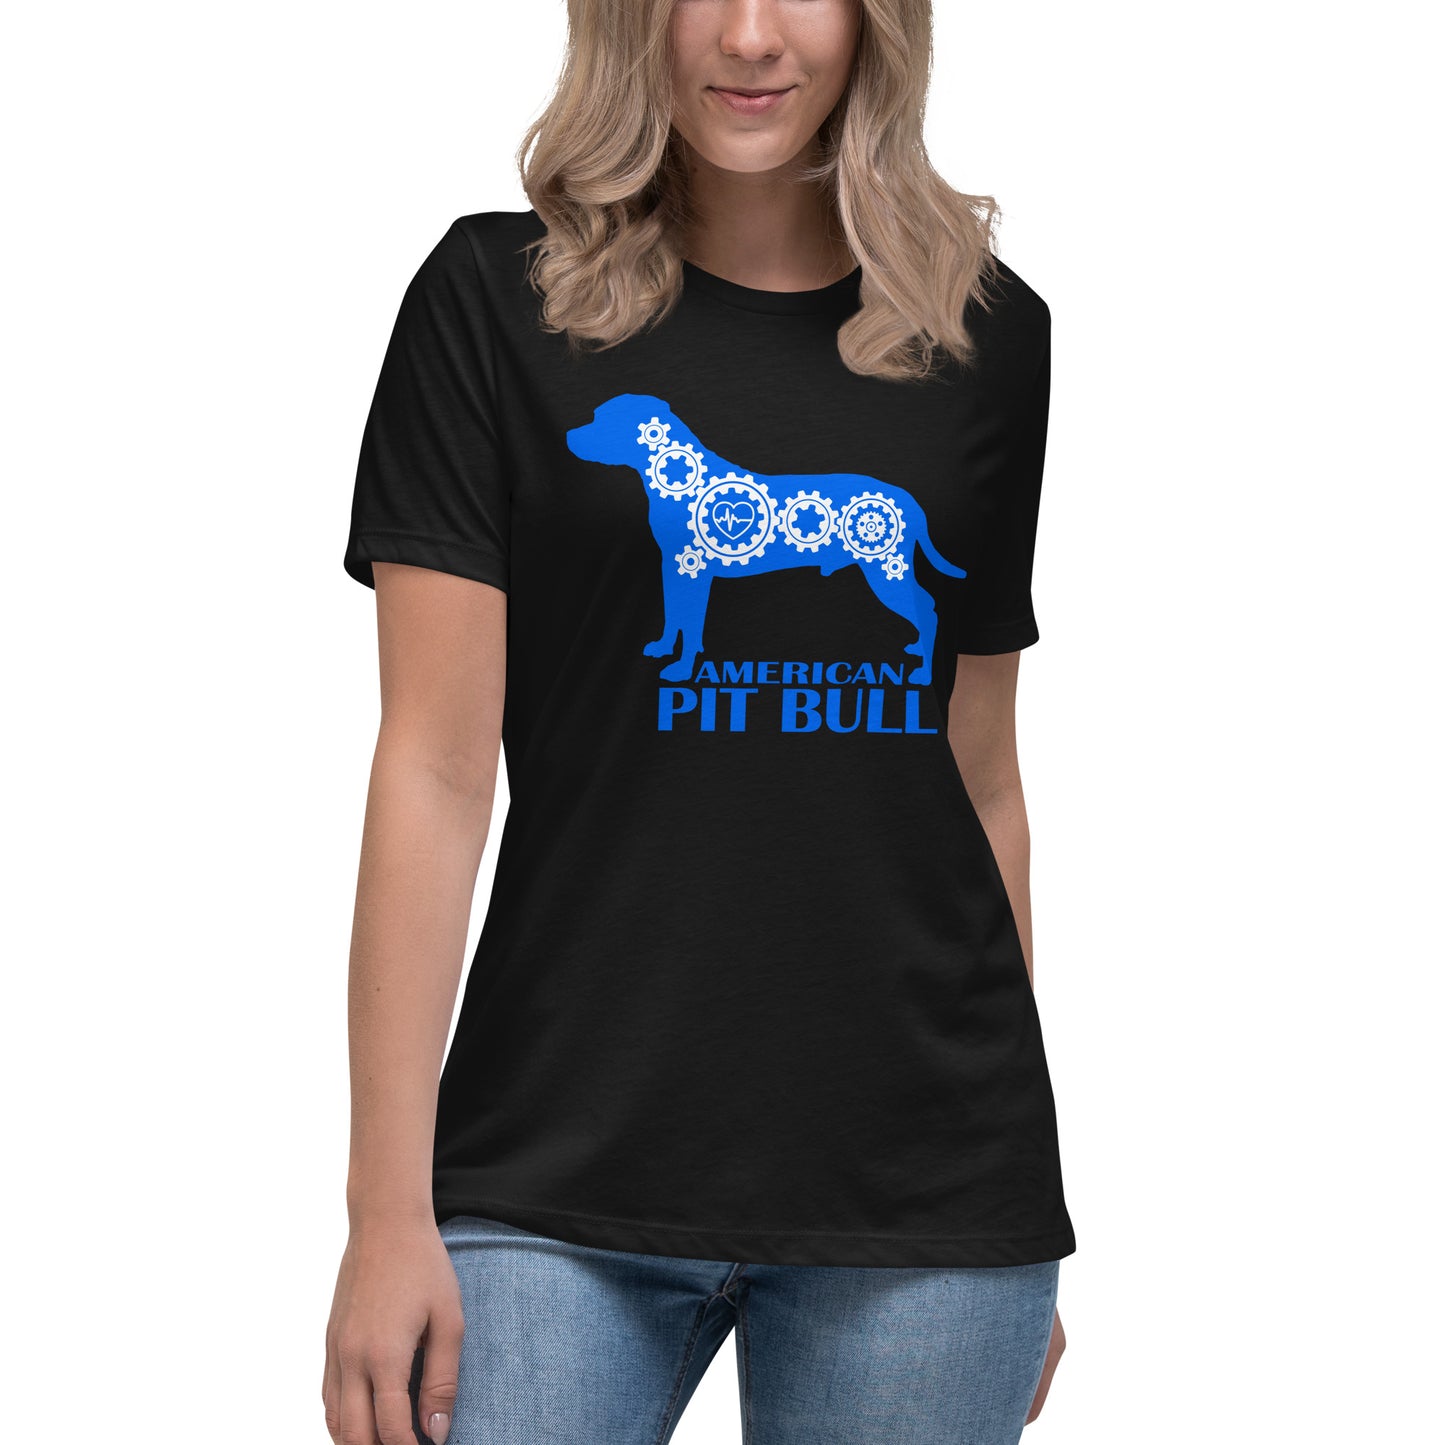 American Pit Bull Bionic women’s black t-shirt by Dog Artistry.